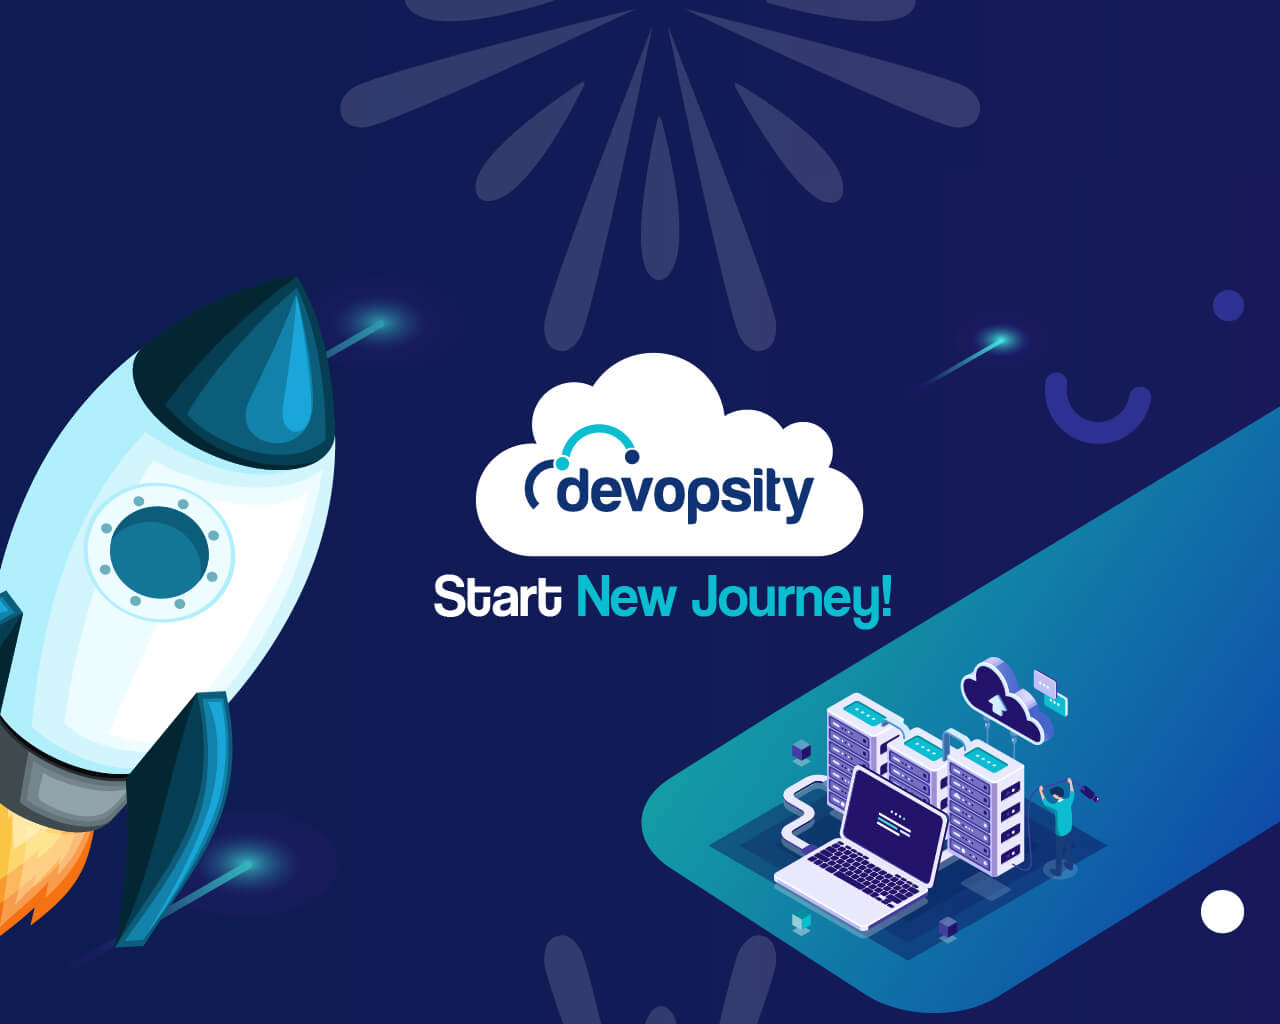 Devopsity - Start New Journey! Devops services & migration to cloud | AWS AZURE GCP